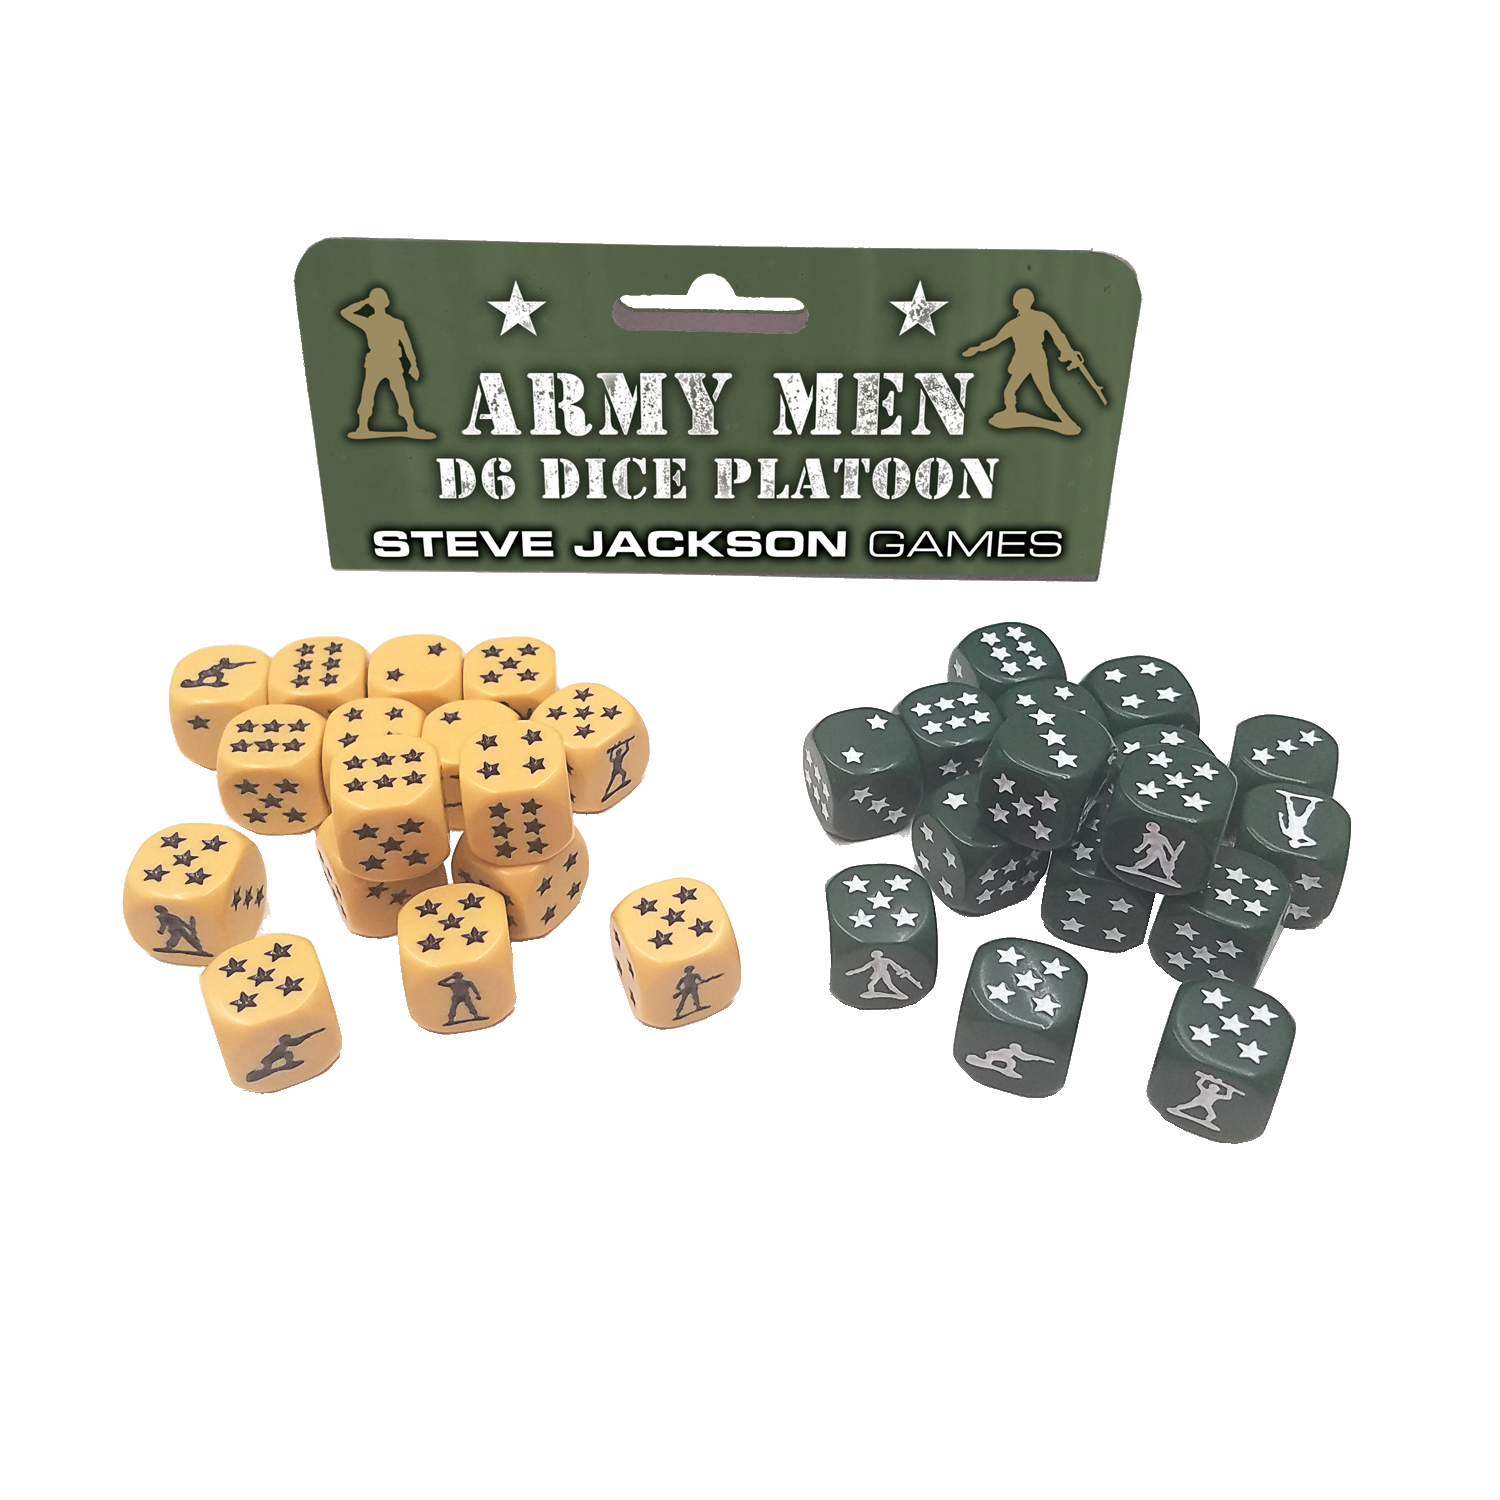 Army Men d6 Dice Platoon